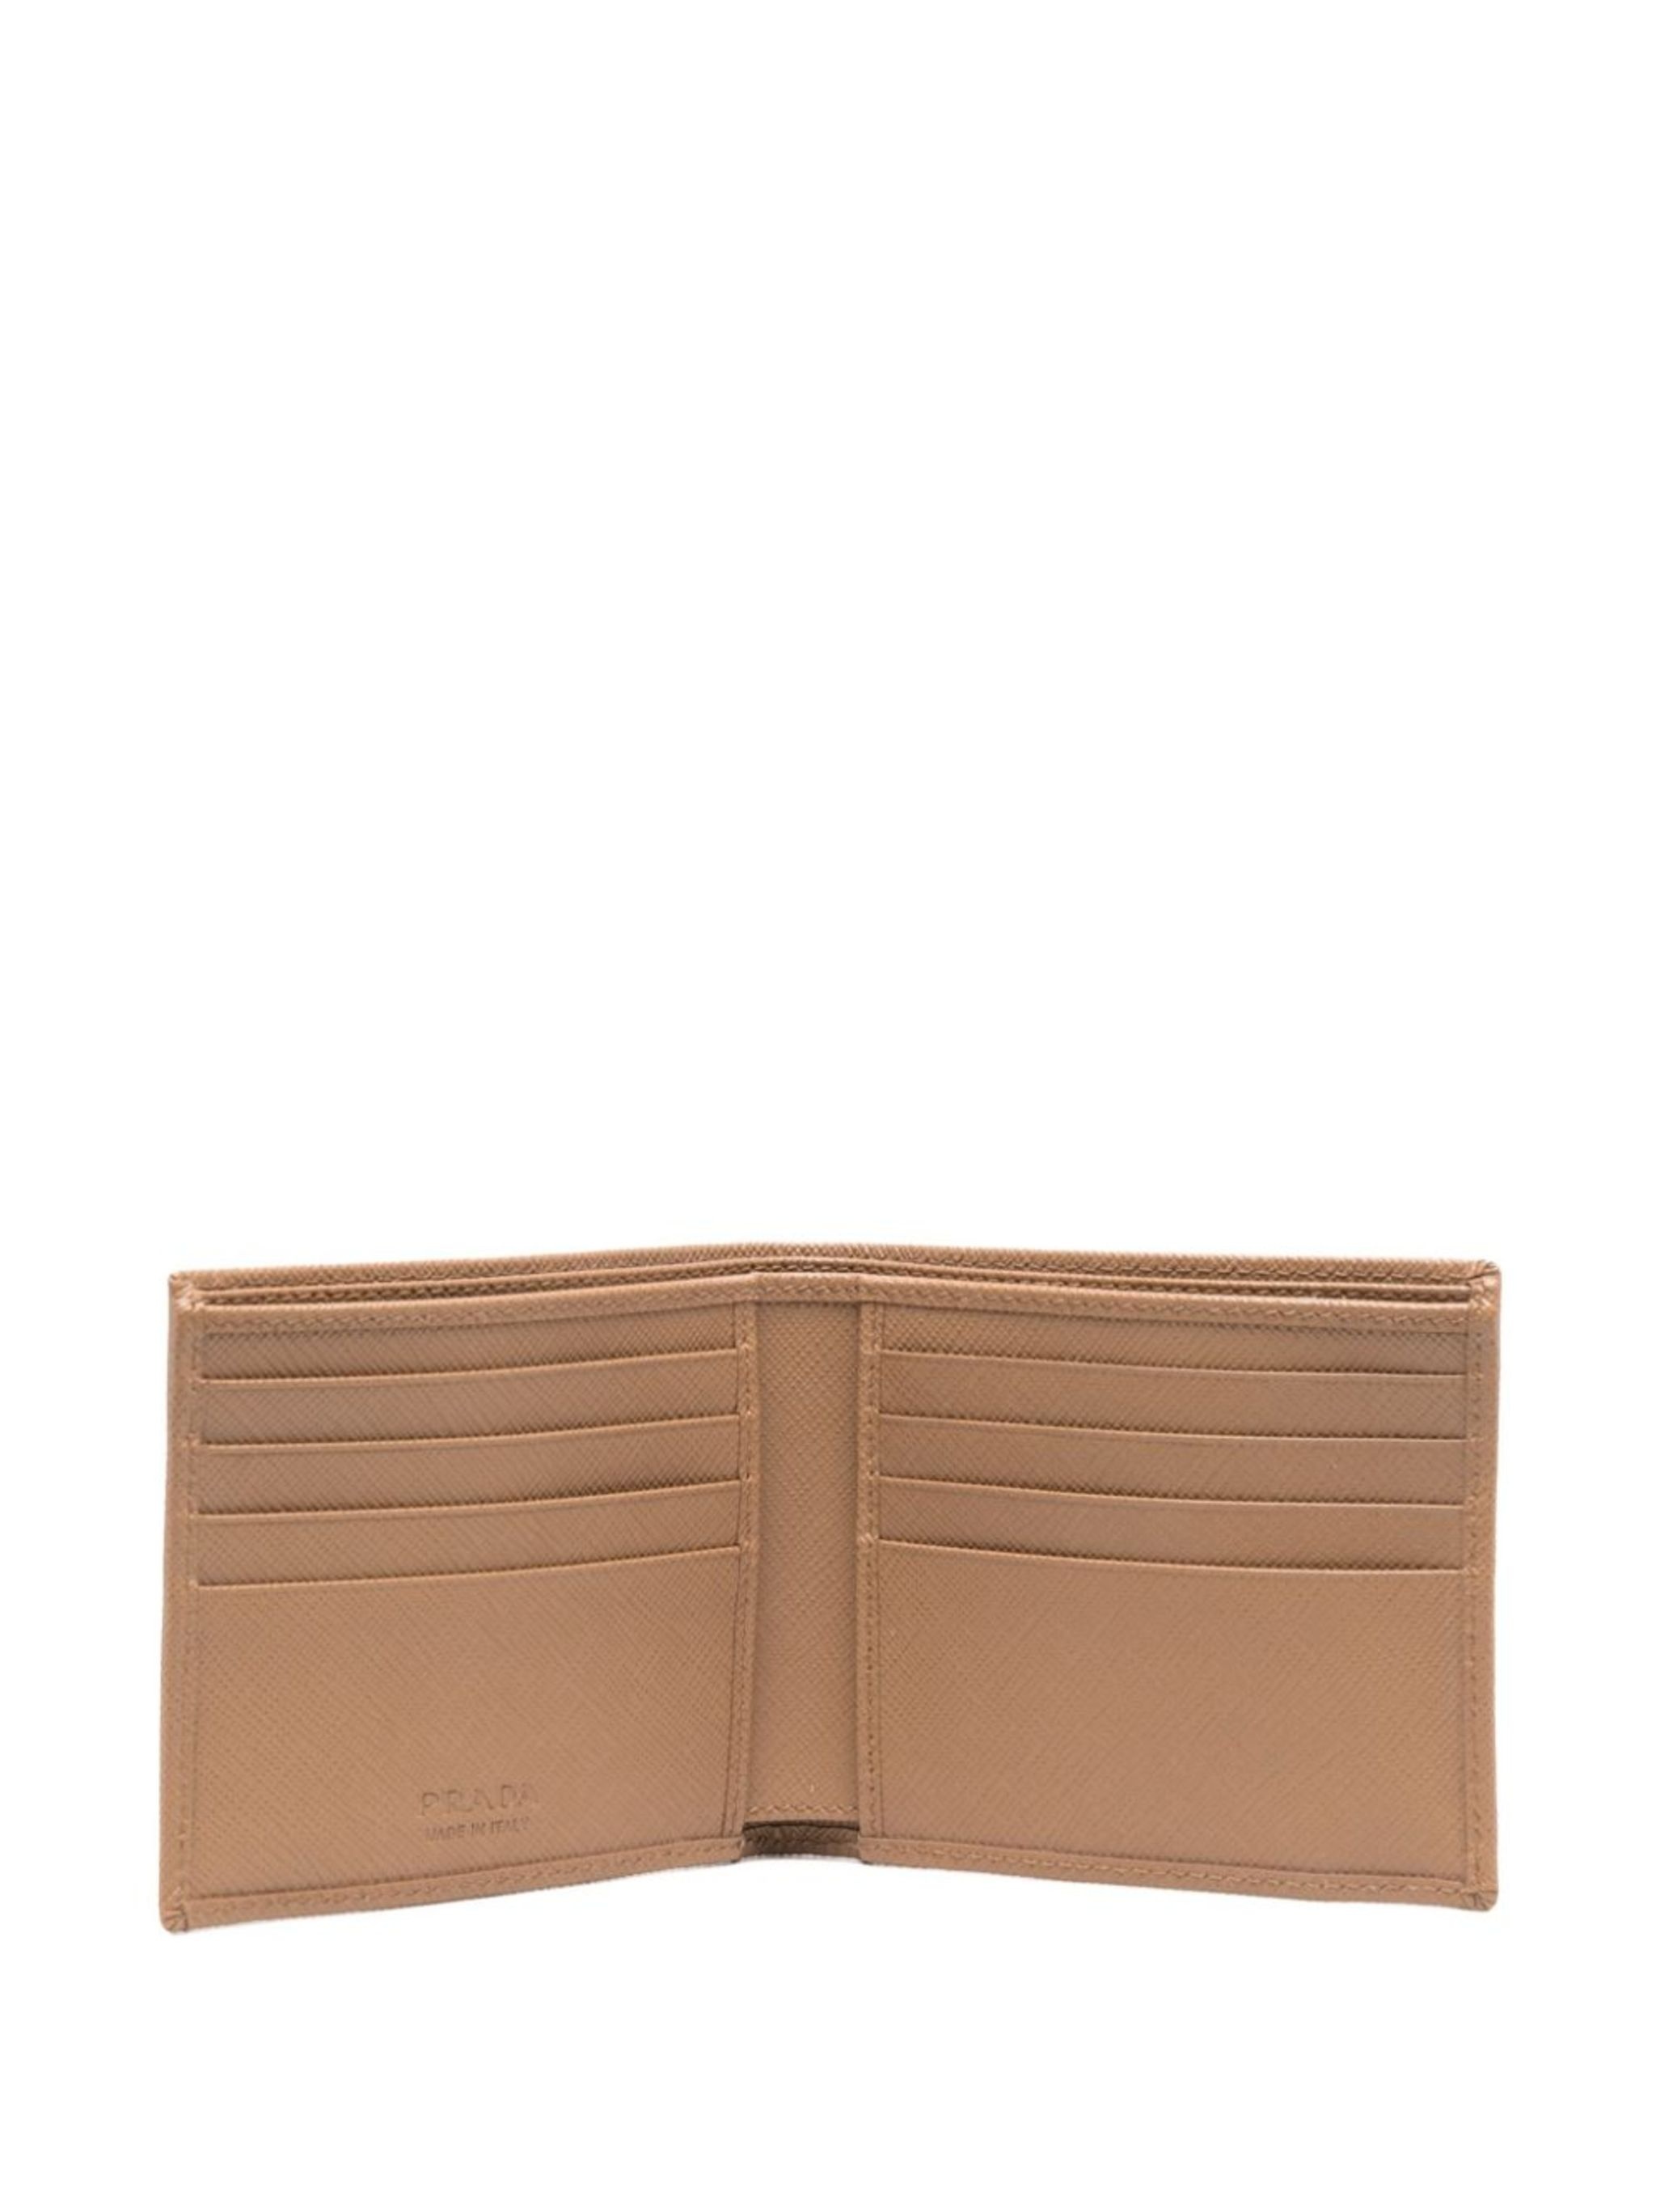 Saffiano leather bi-fold wallet - 3